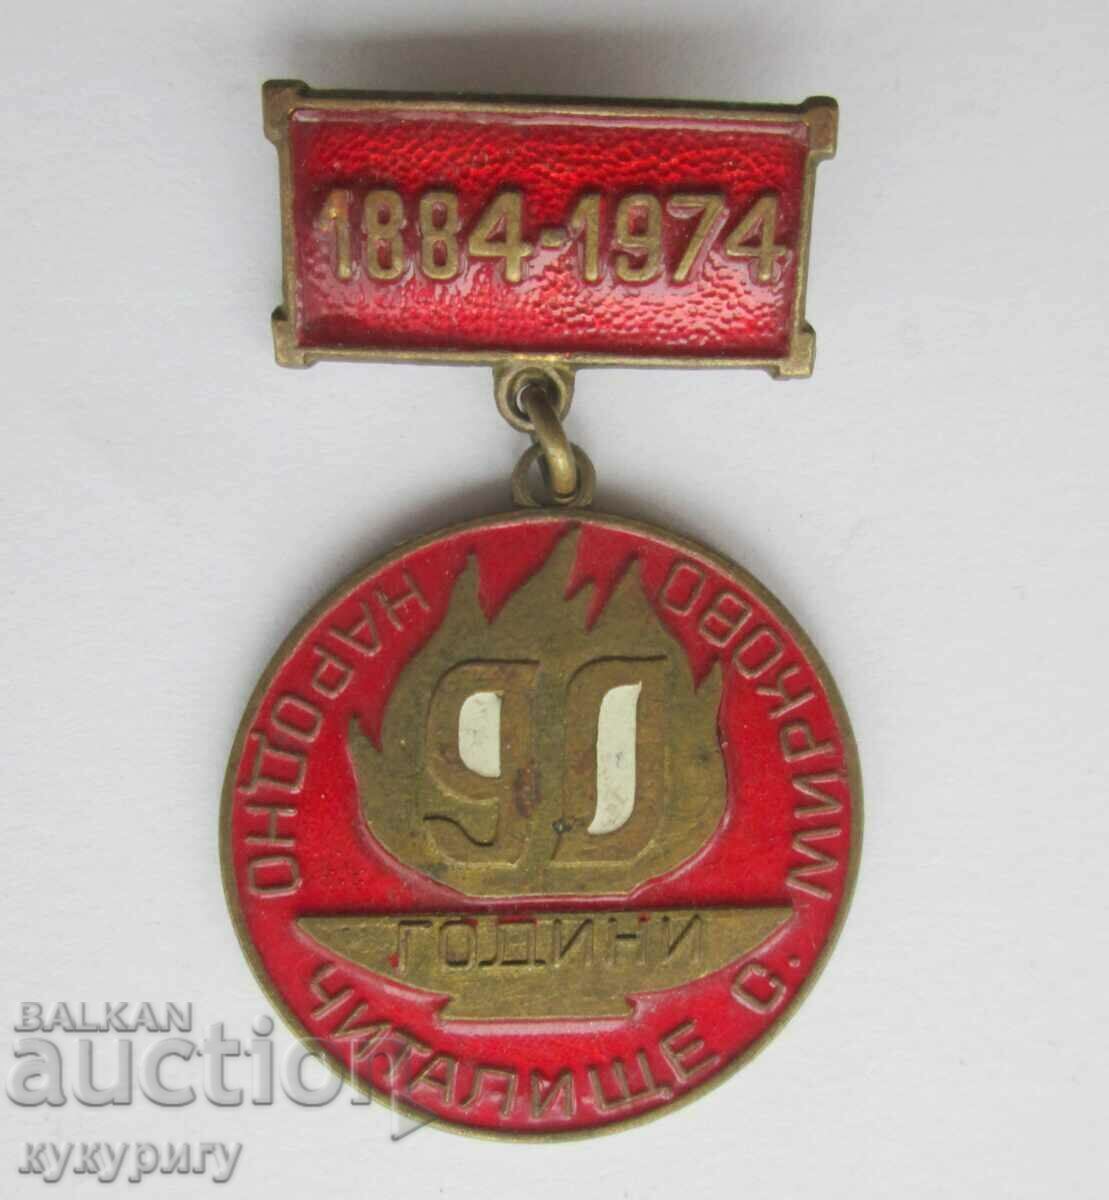 Old medal sign badge People's Community Center Mirkovo 1884-1974